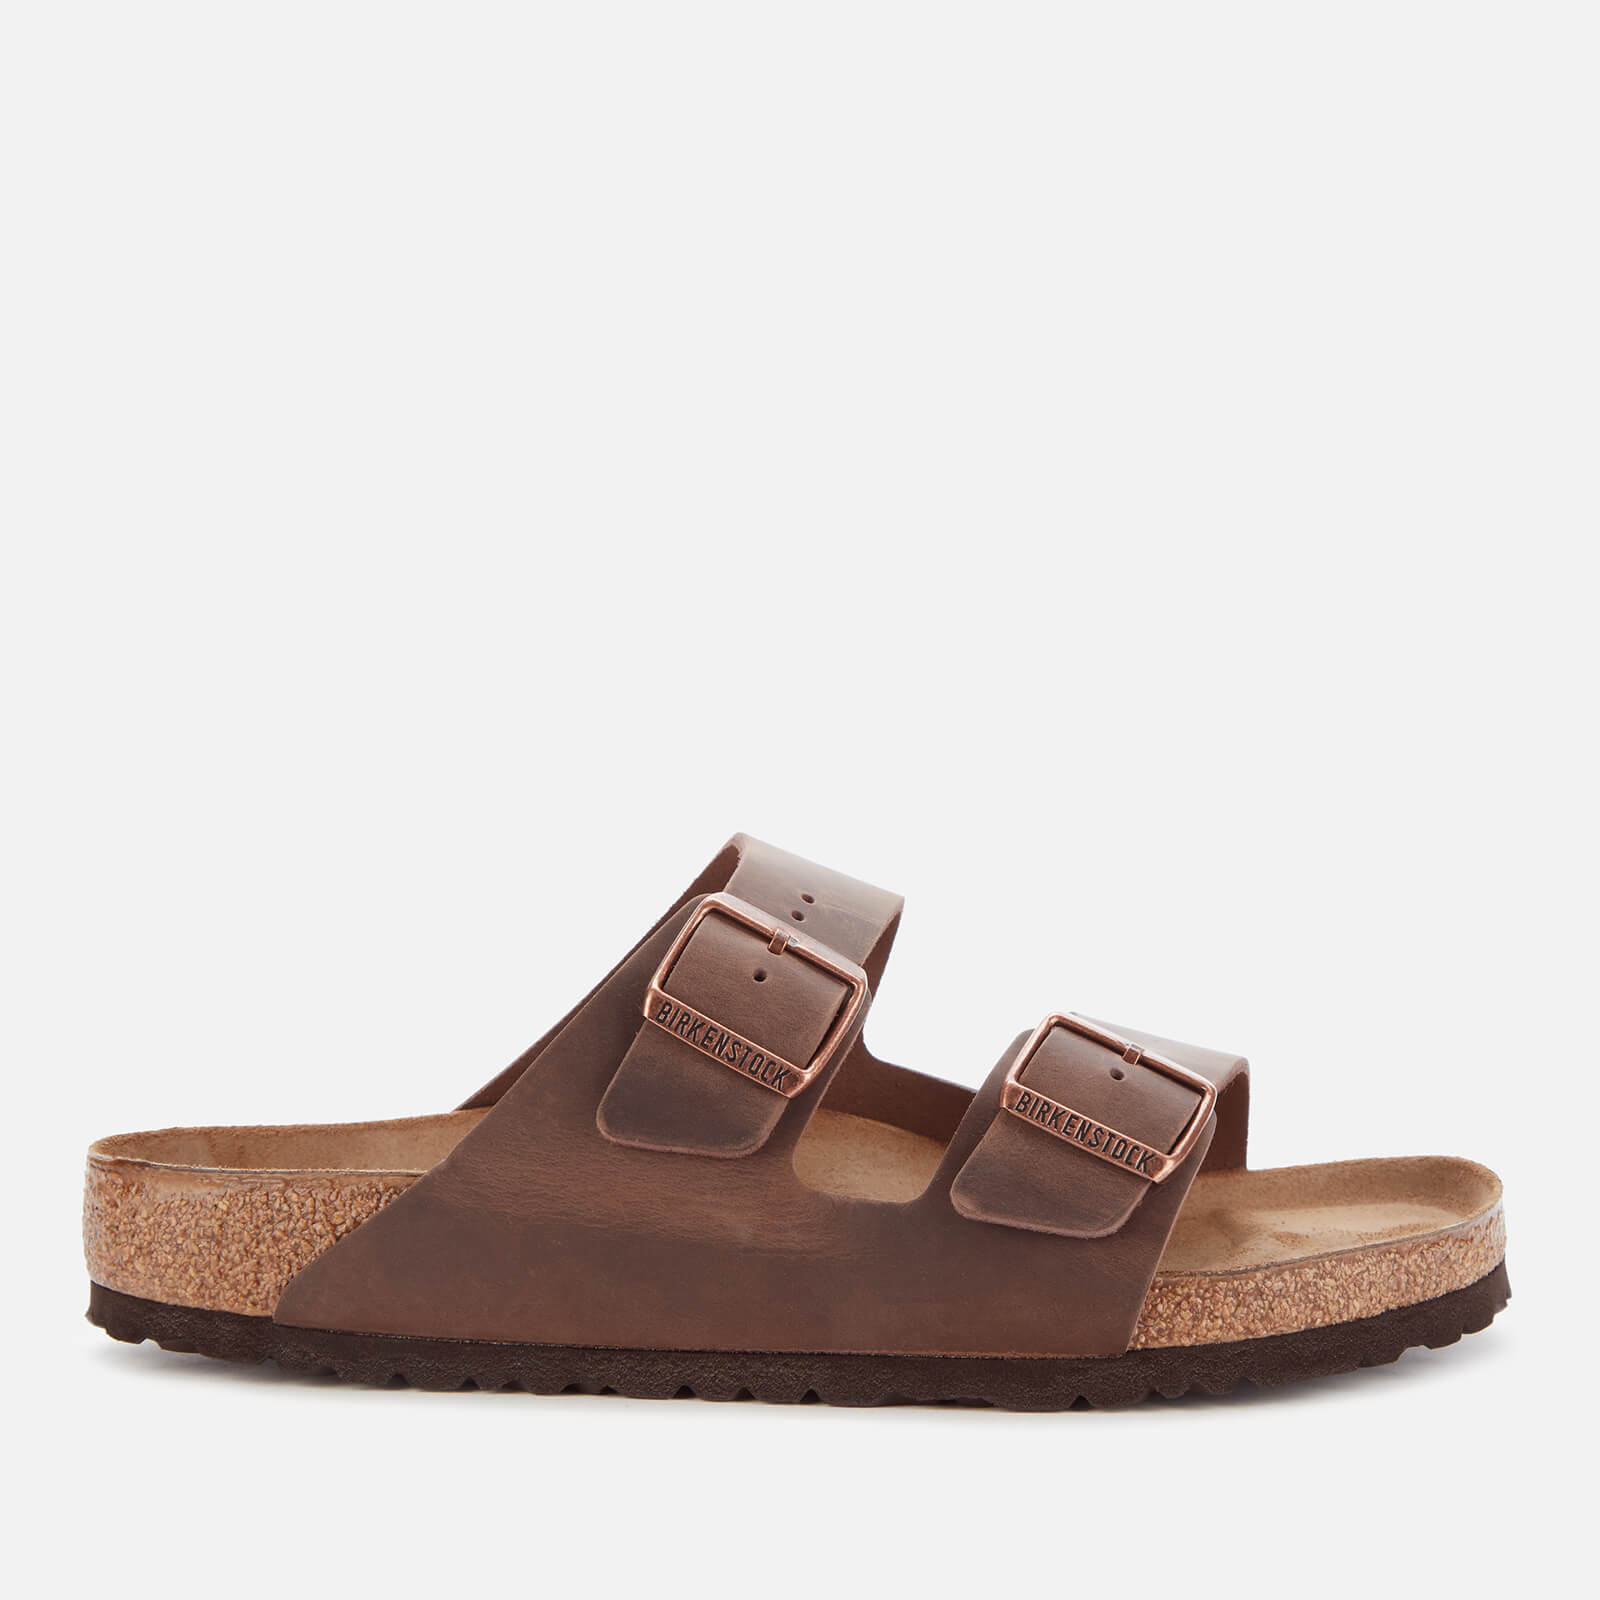 Birkenstock Men’s Arizona Oiled Leather Double Strap Sandals - Habana